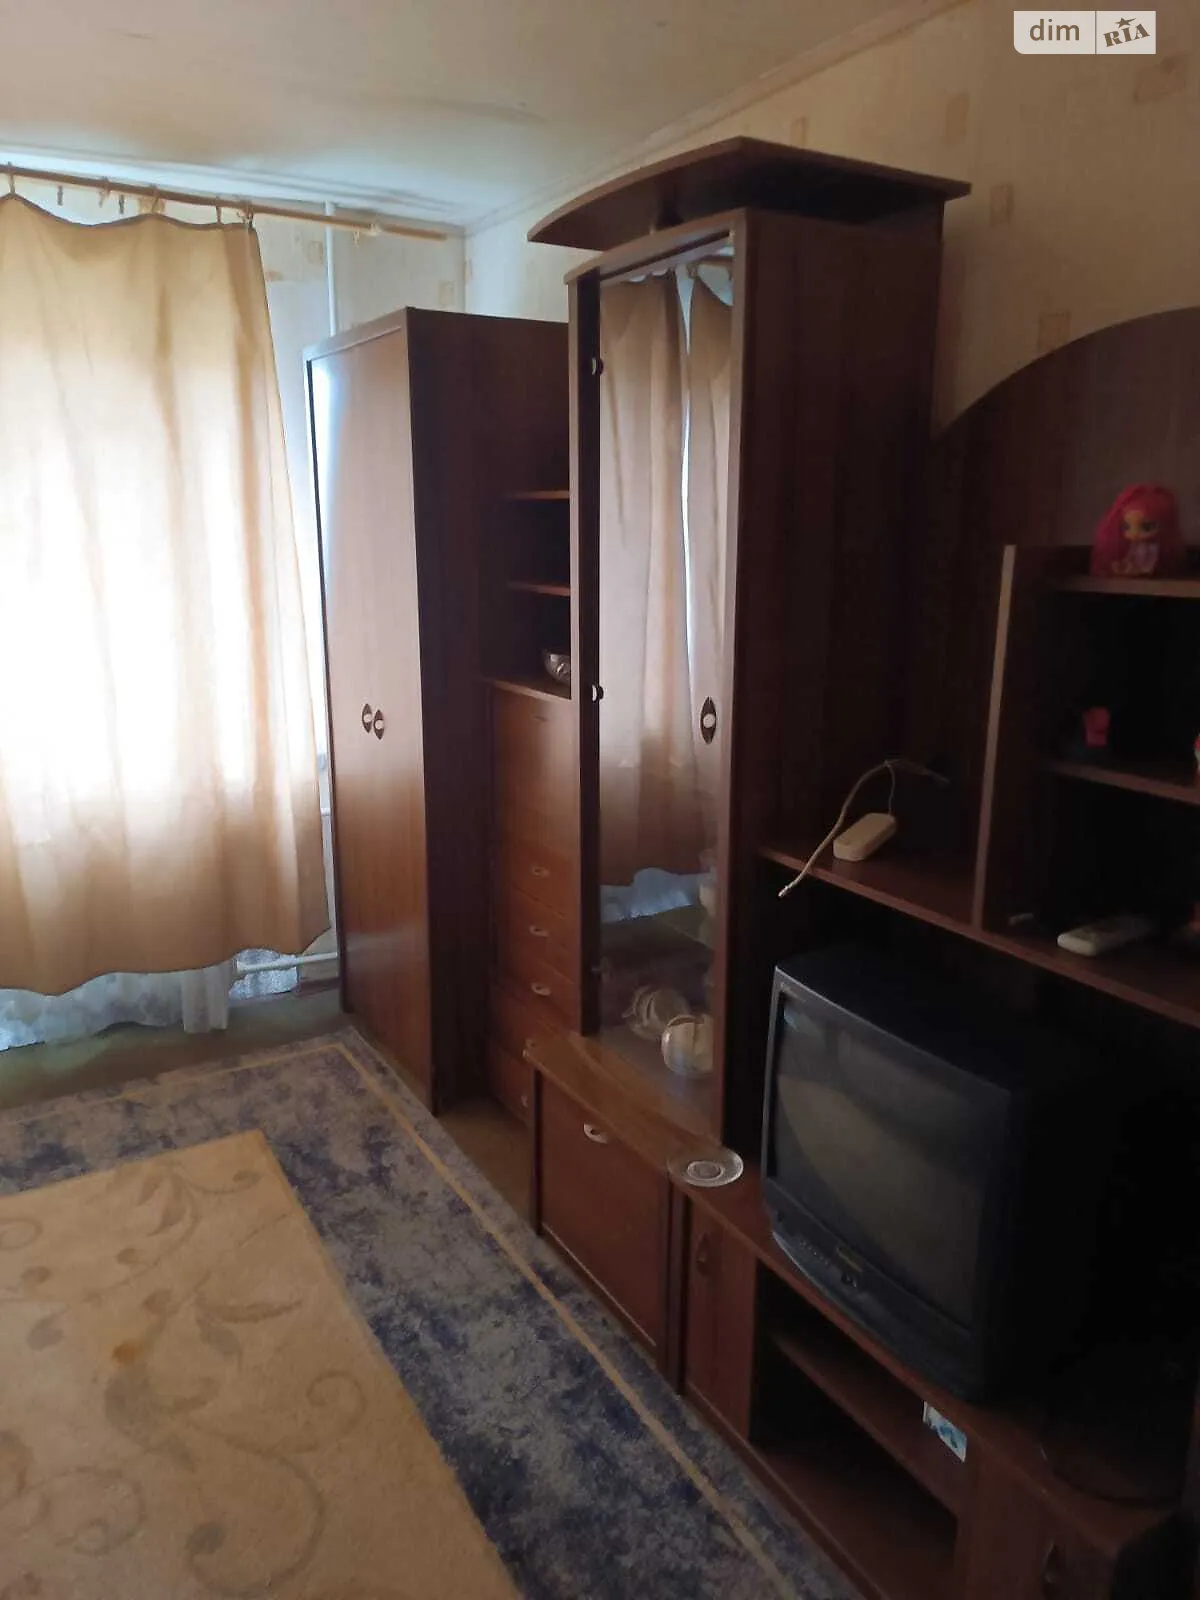 Сдается в аренду комната 26 кв. м в Харькове, цена: 2200 грн